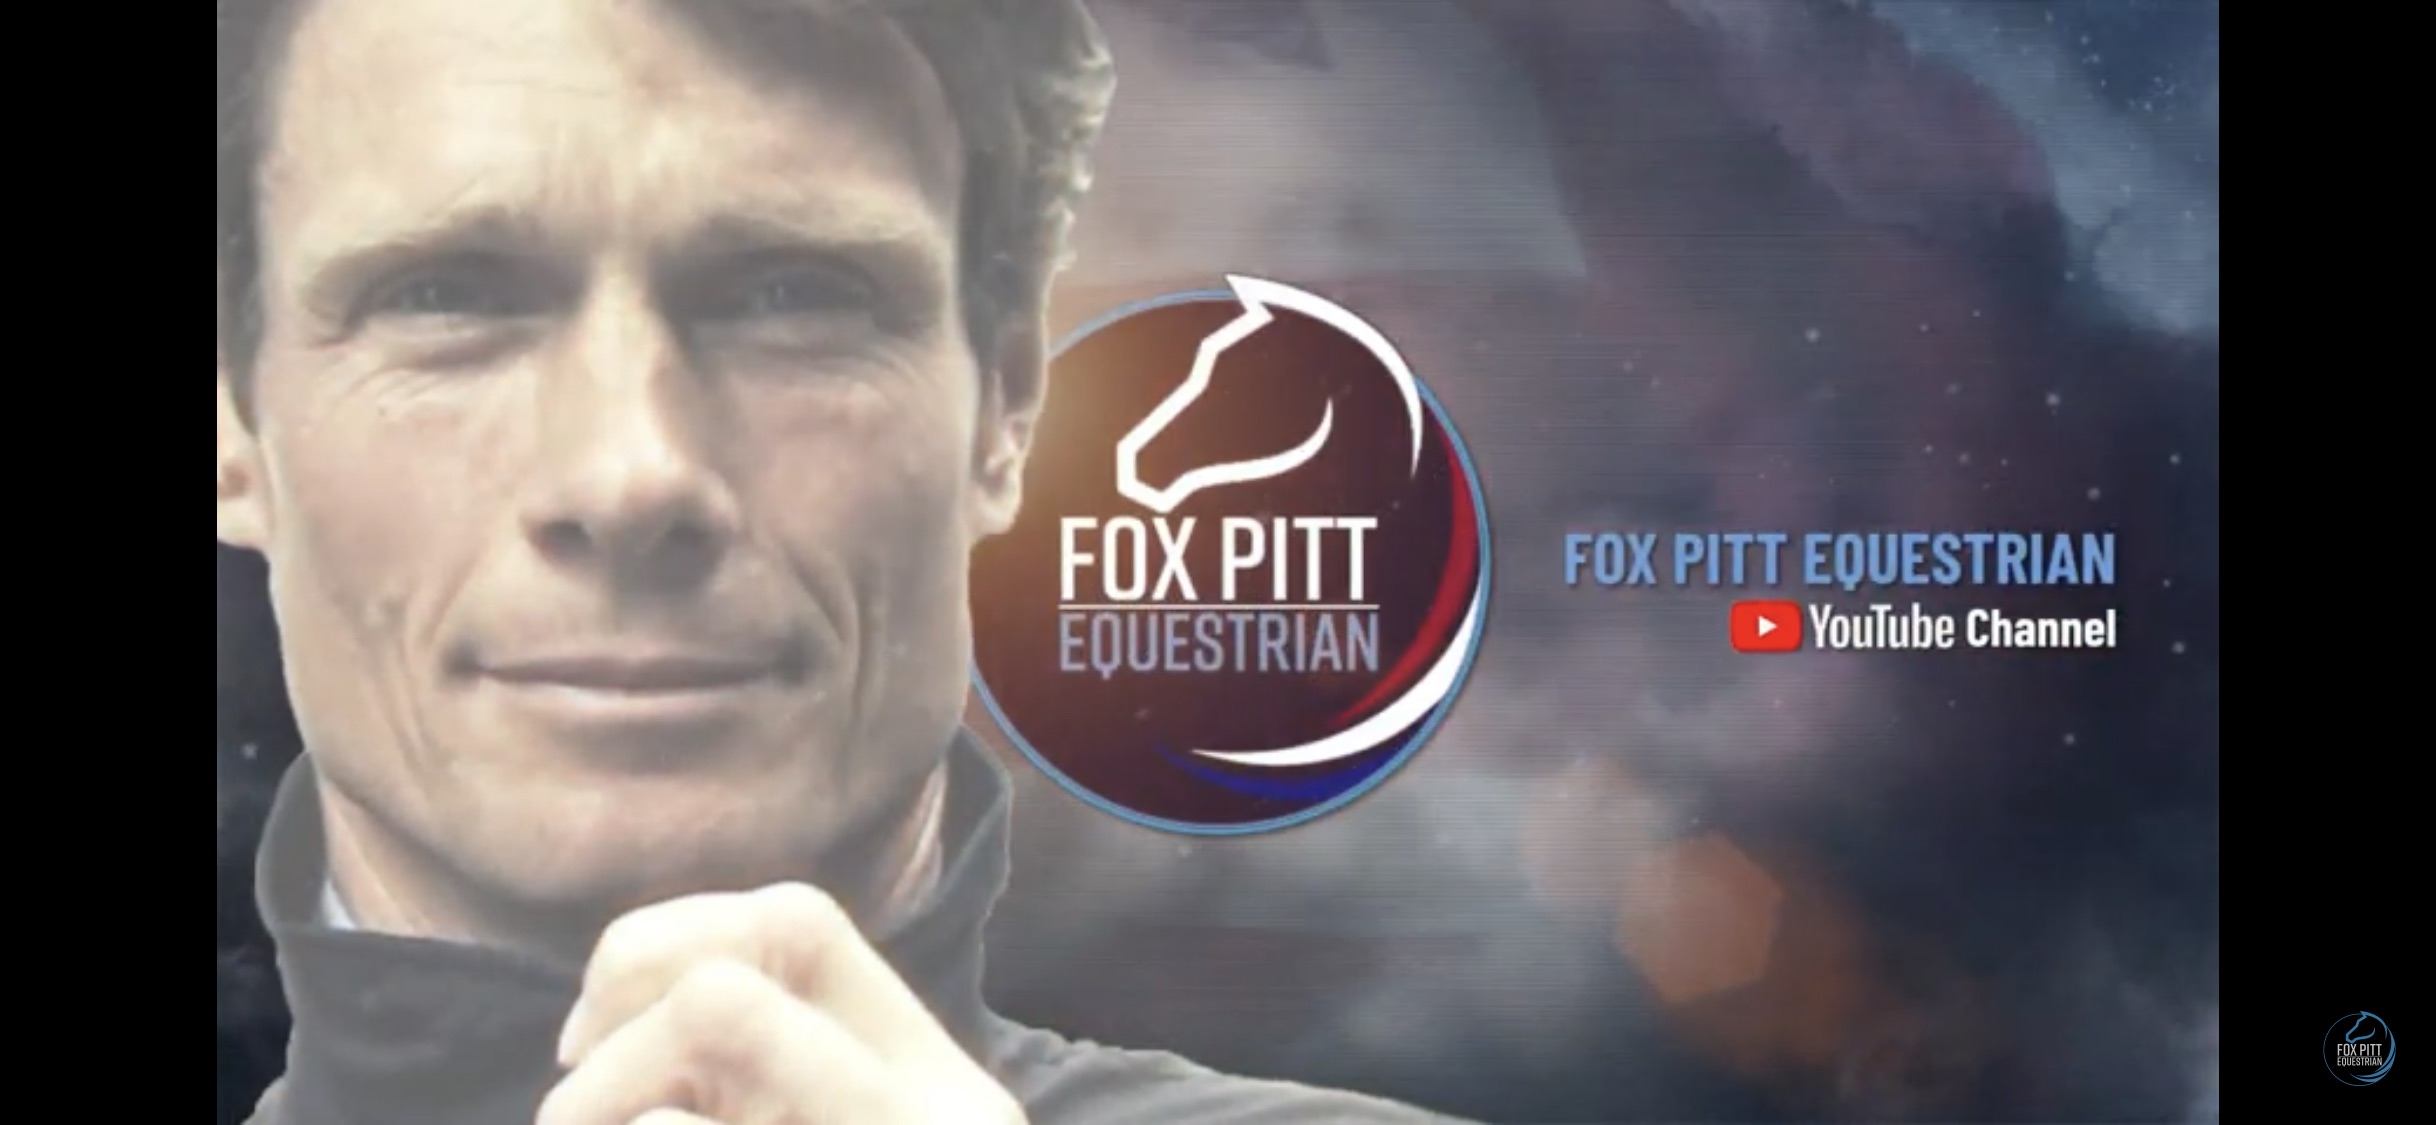 Fox-Pitt Equestrian TV launched